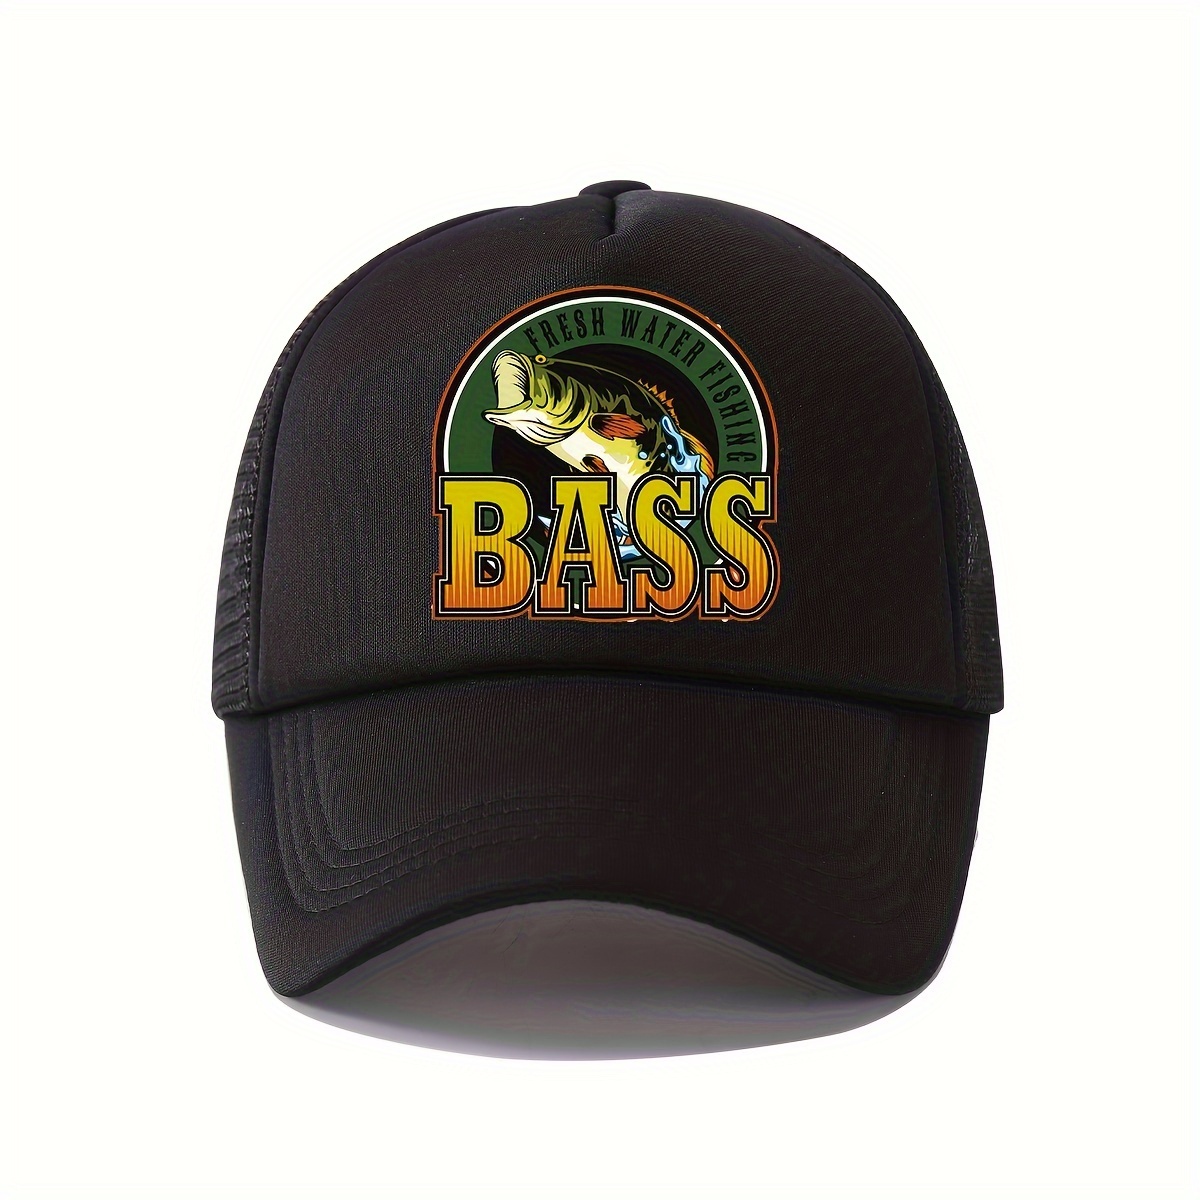 The Bass Tank® Co-Branded Fishing Hat - Trucker-style Cap